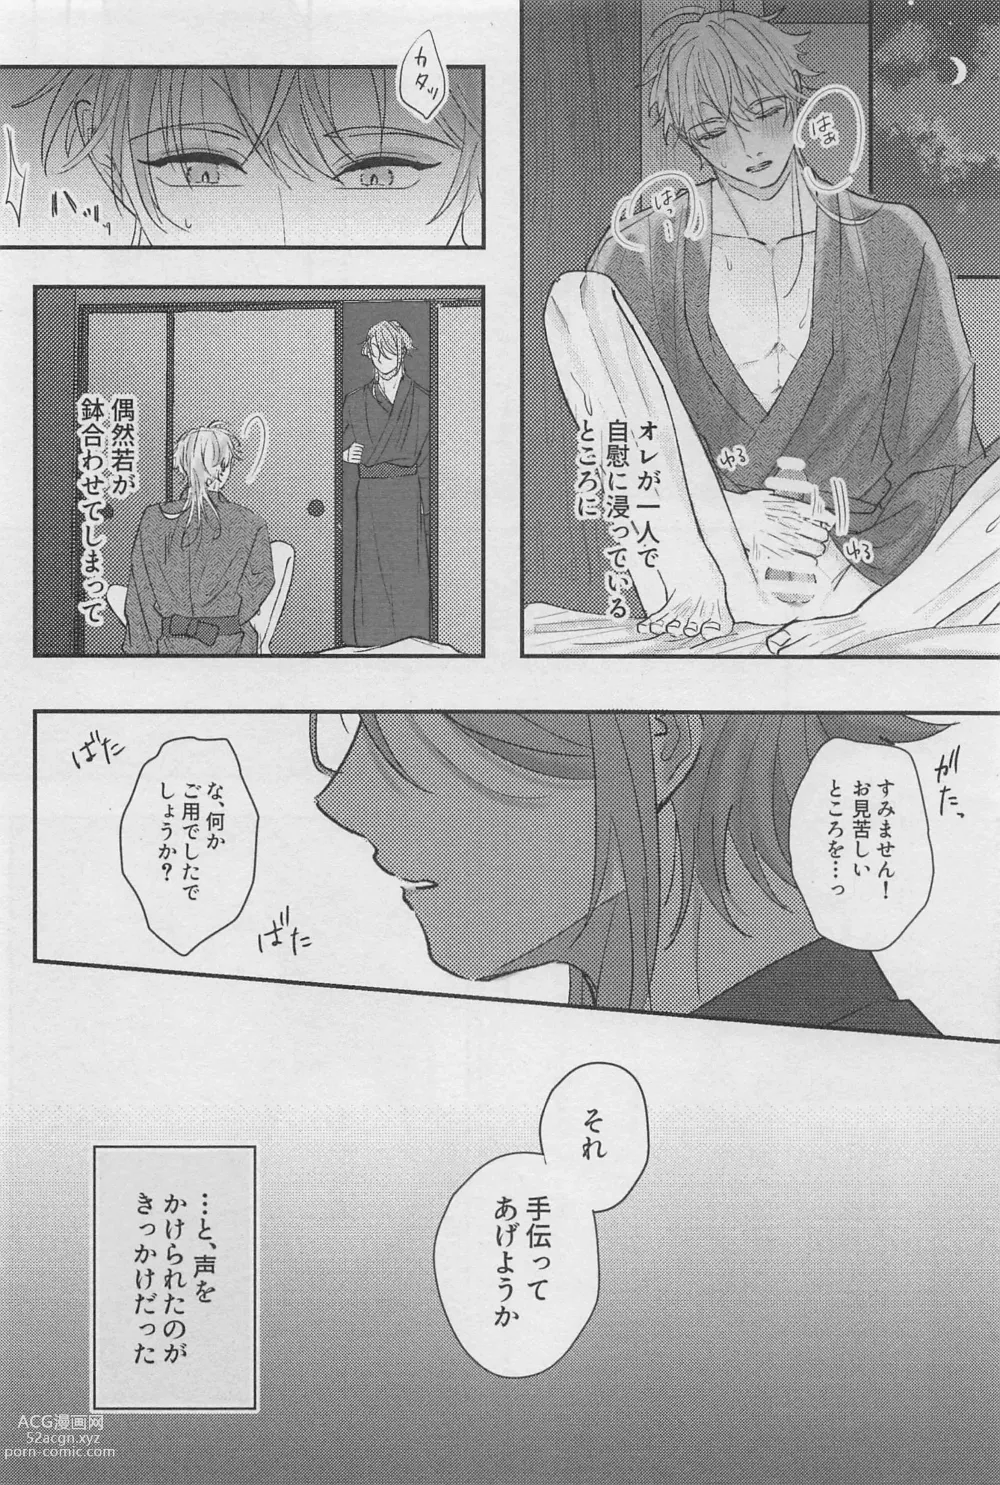 Page 5 of doujinshi Reimei o Tsugu